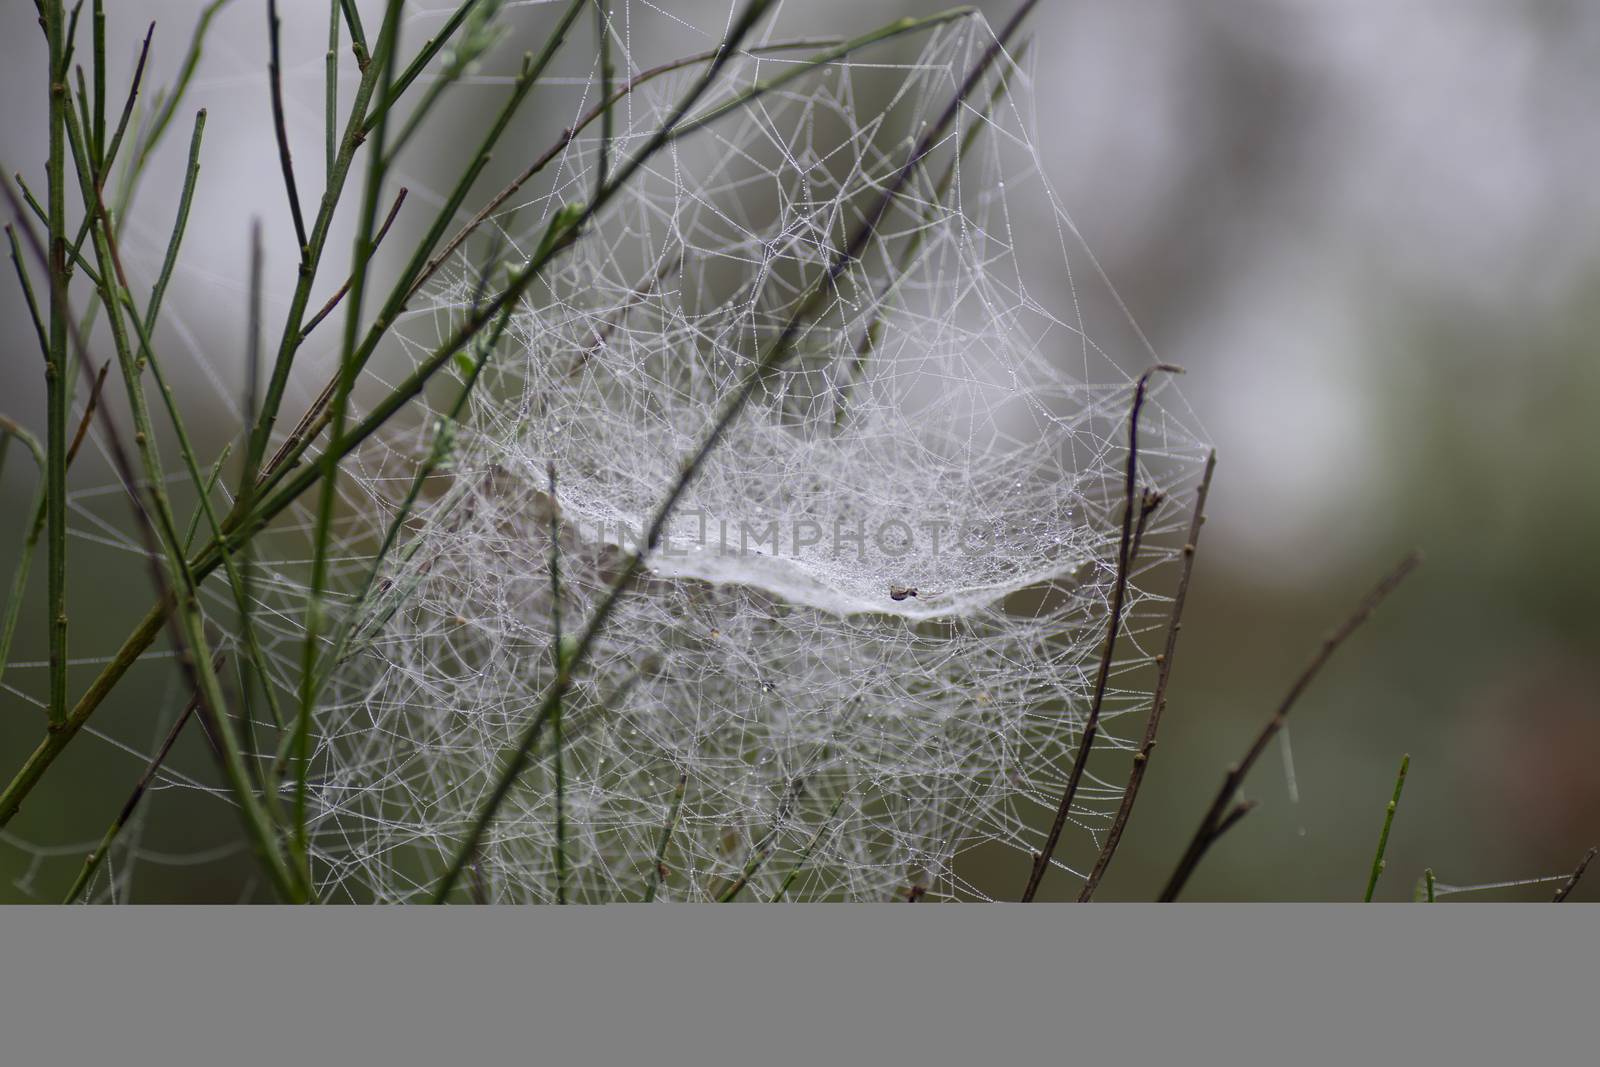 spider web on broom by carfedeph